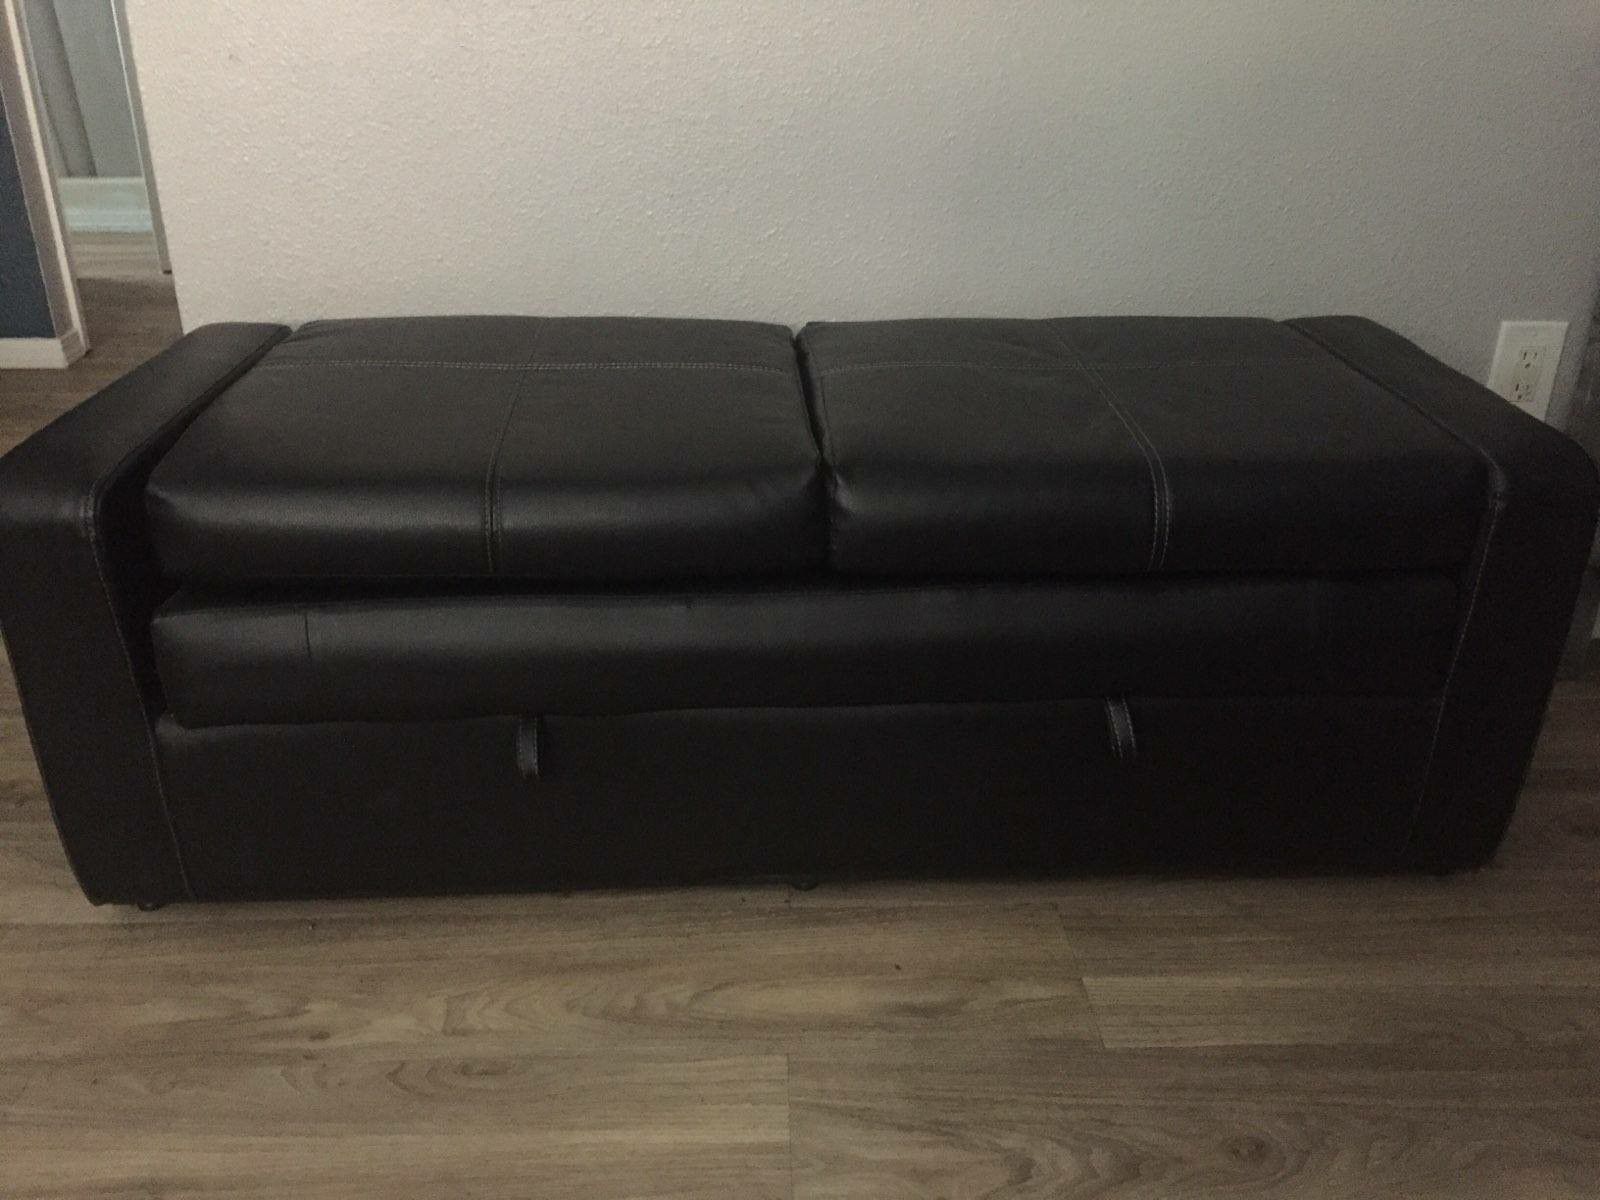 Storage bench/sofa